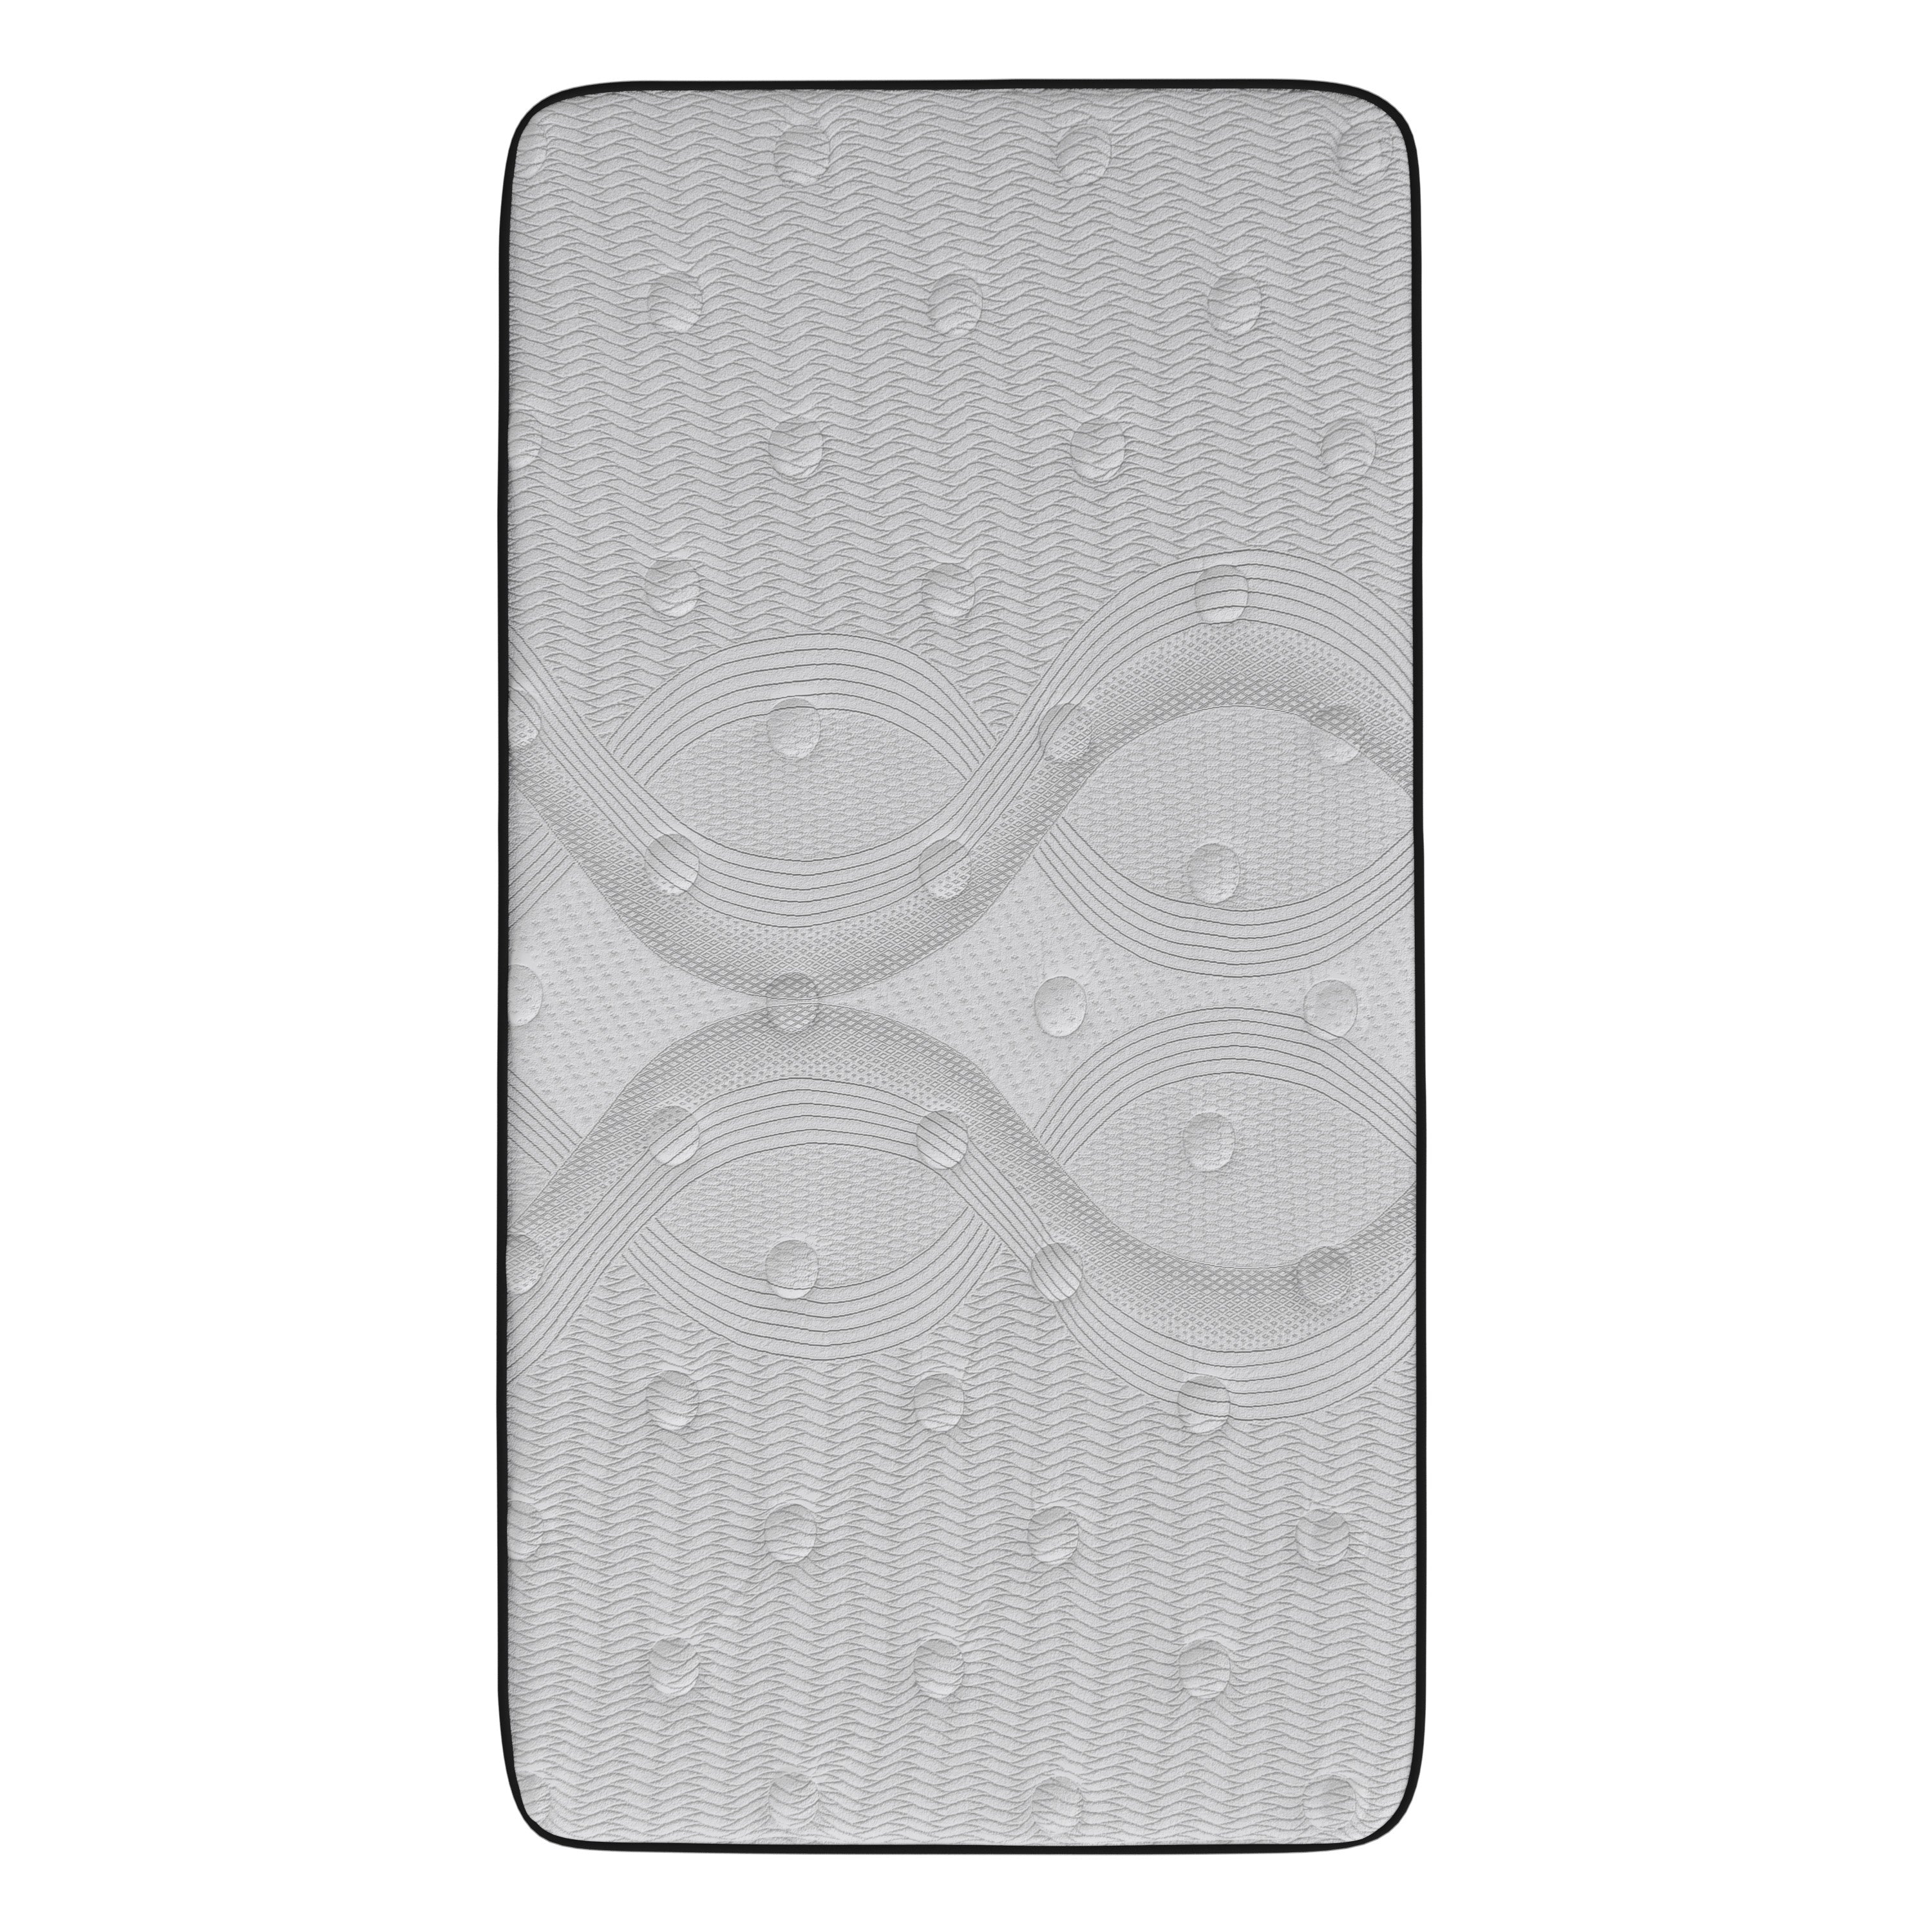 Capri Comfortable Sleep Firm 12 Inch CertiPUR-US Certified Hybrid Pocket Spring Mattress, Extra Firm Feel, Durable Support, Mattress in a Box-Mattress-Flash Furniture-Wall2Wall Furnishings